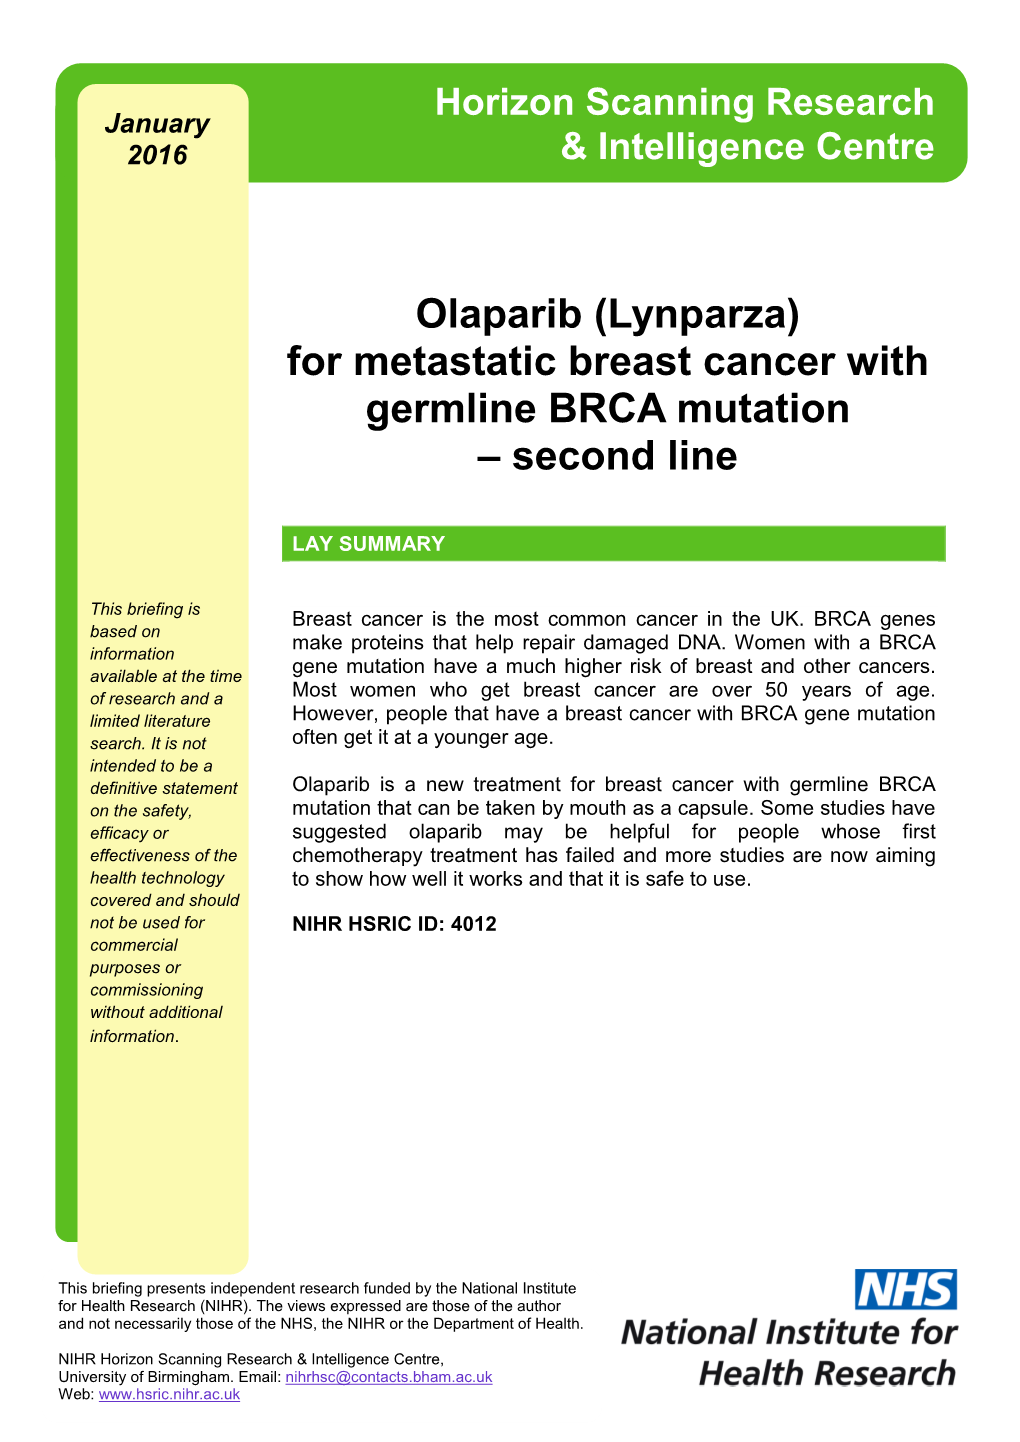 Olaparib (Lynparza) for Metastatic Breast Cancer with Germline BRCA Mutation – Second Line